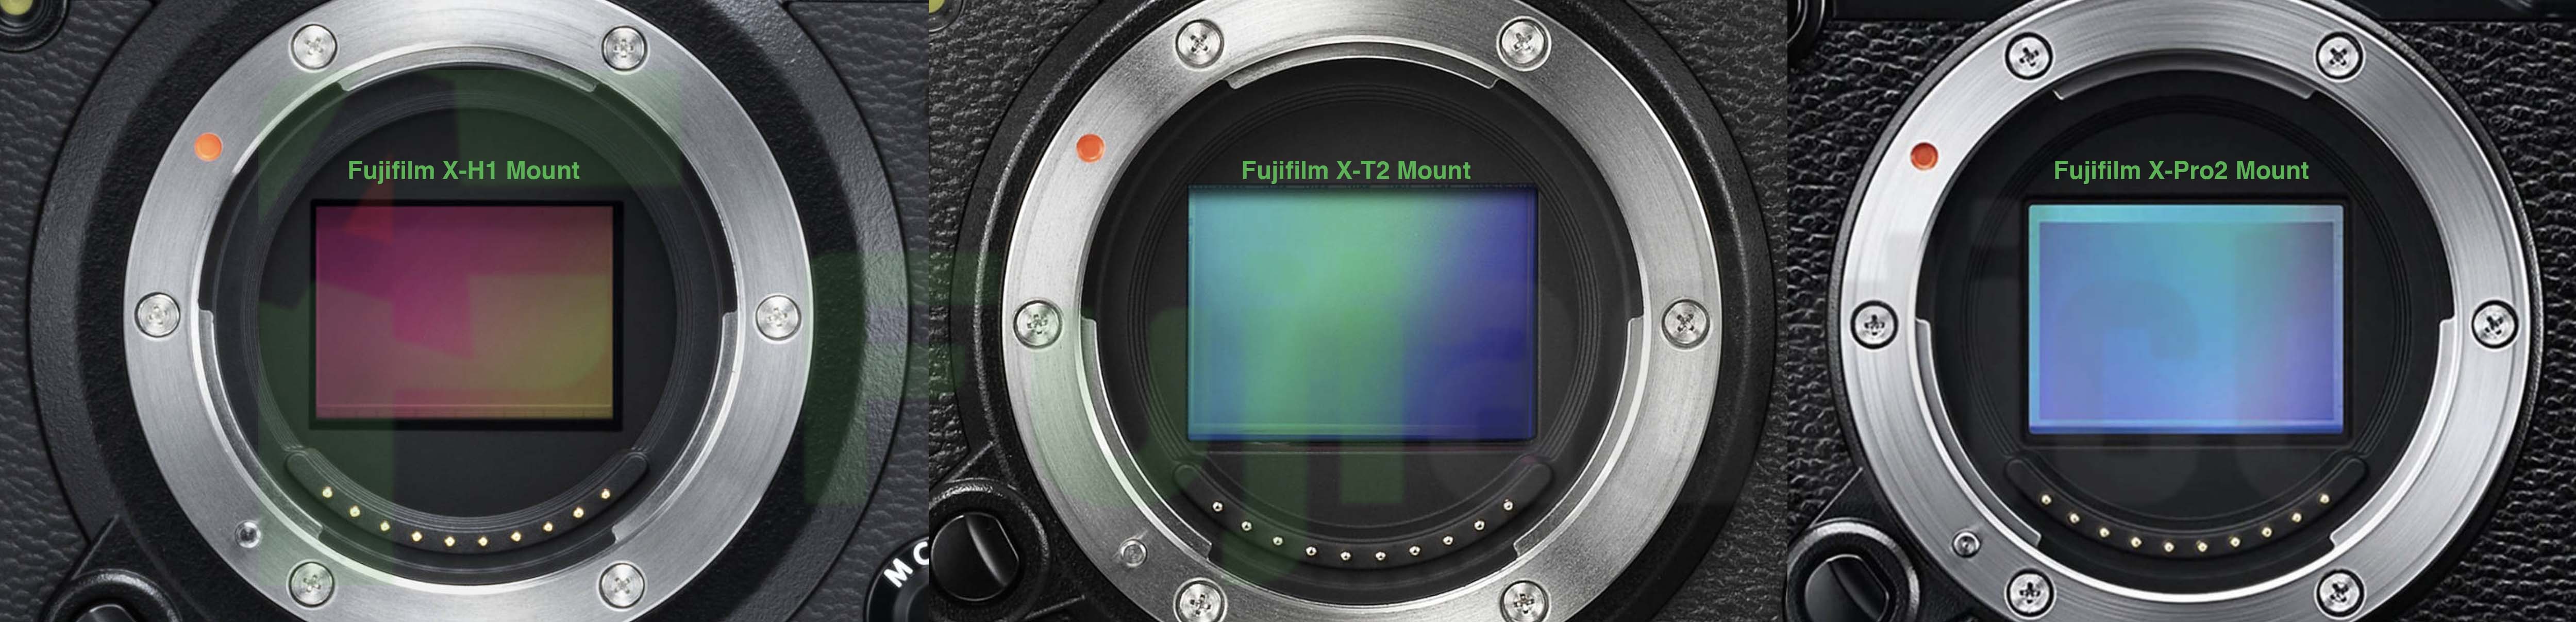 Fujifilm X-H1 Field Testing, ETERNA and a Look at Fujifilm's